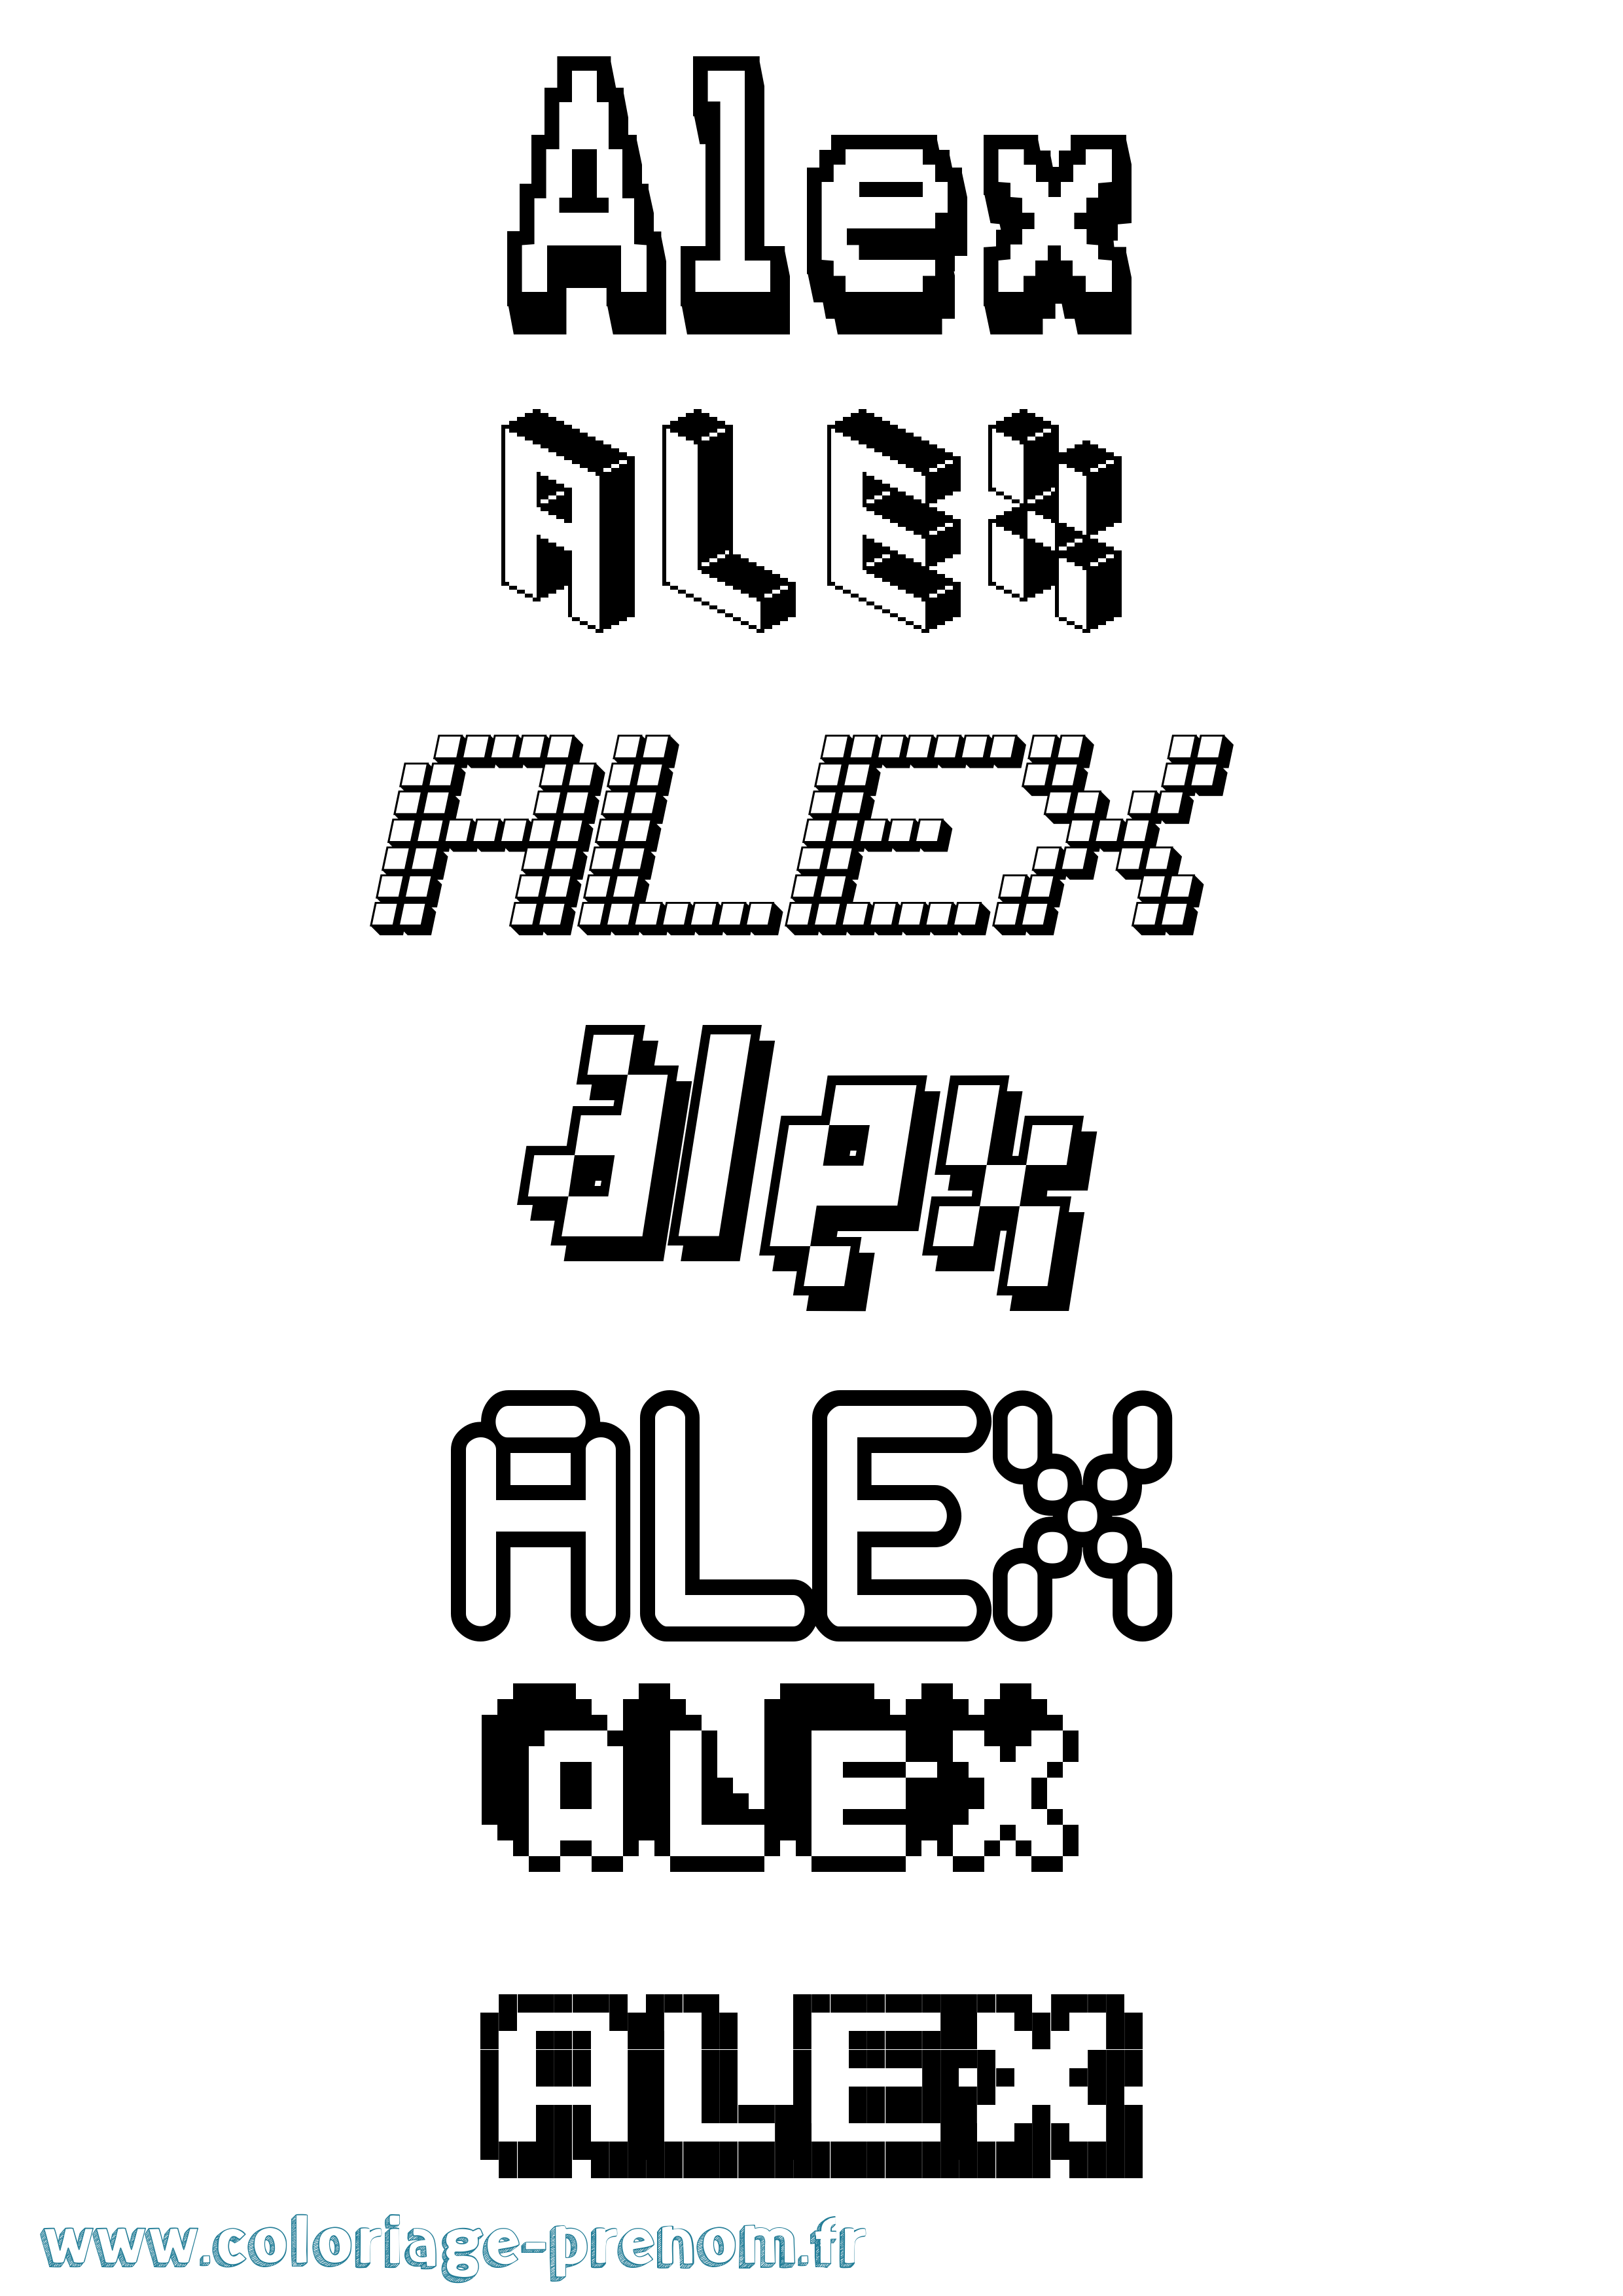 Coloriage prénom Alex Pixel